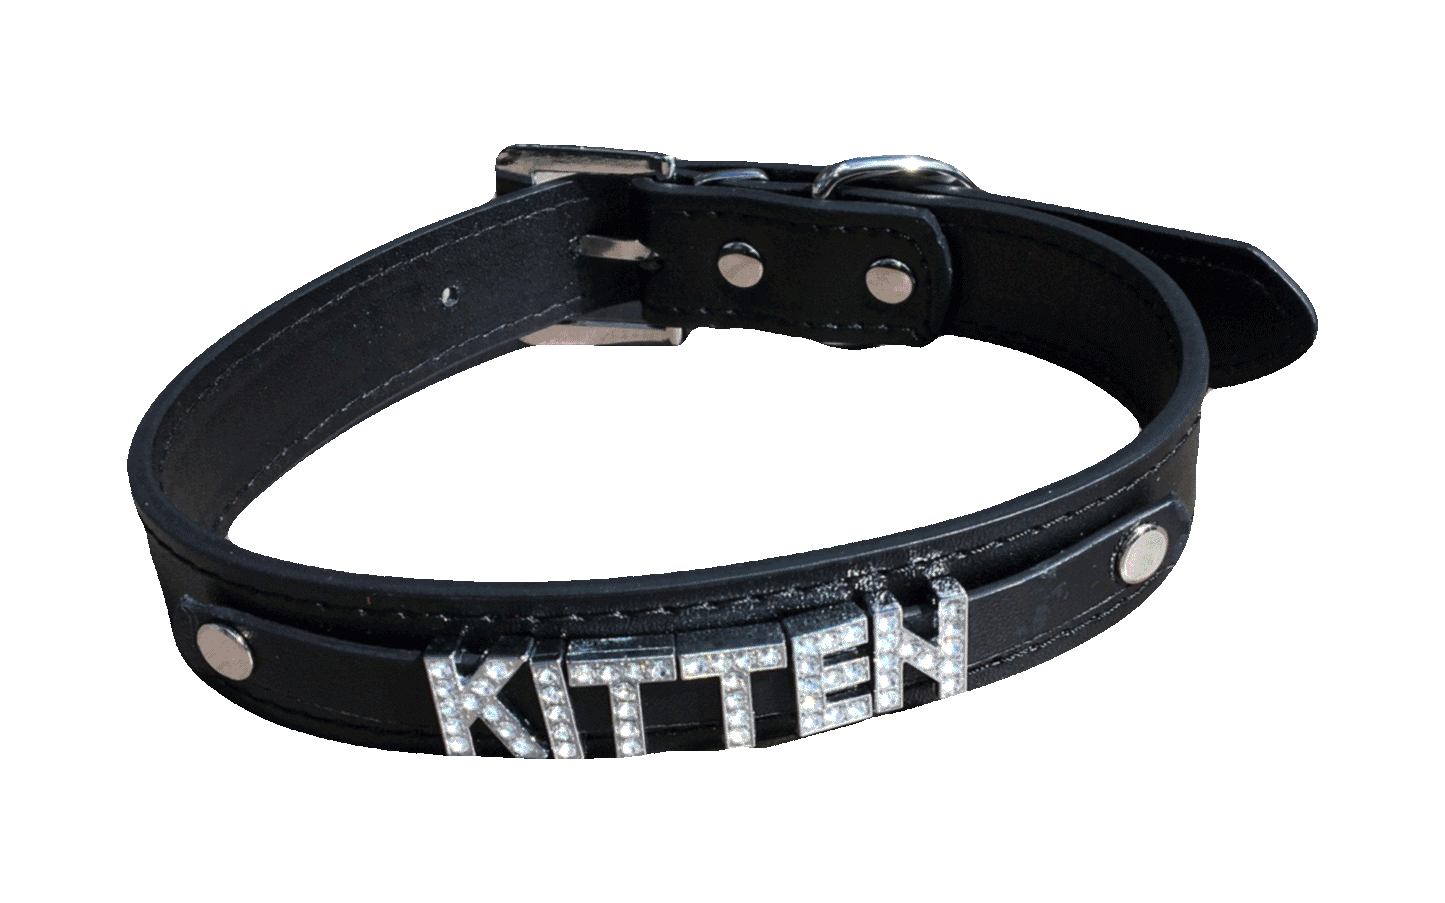 Kitten • Rhinestone Collar • Choose Your Color